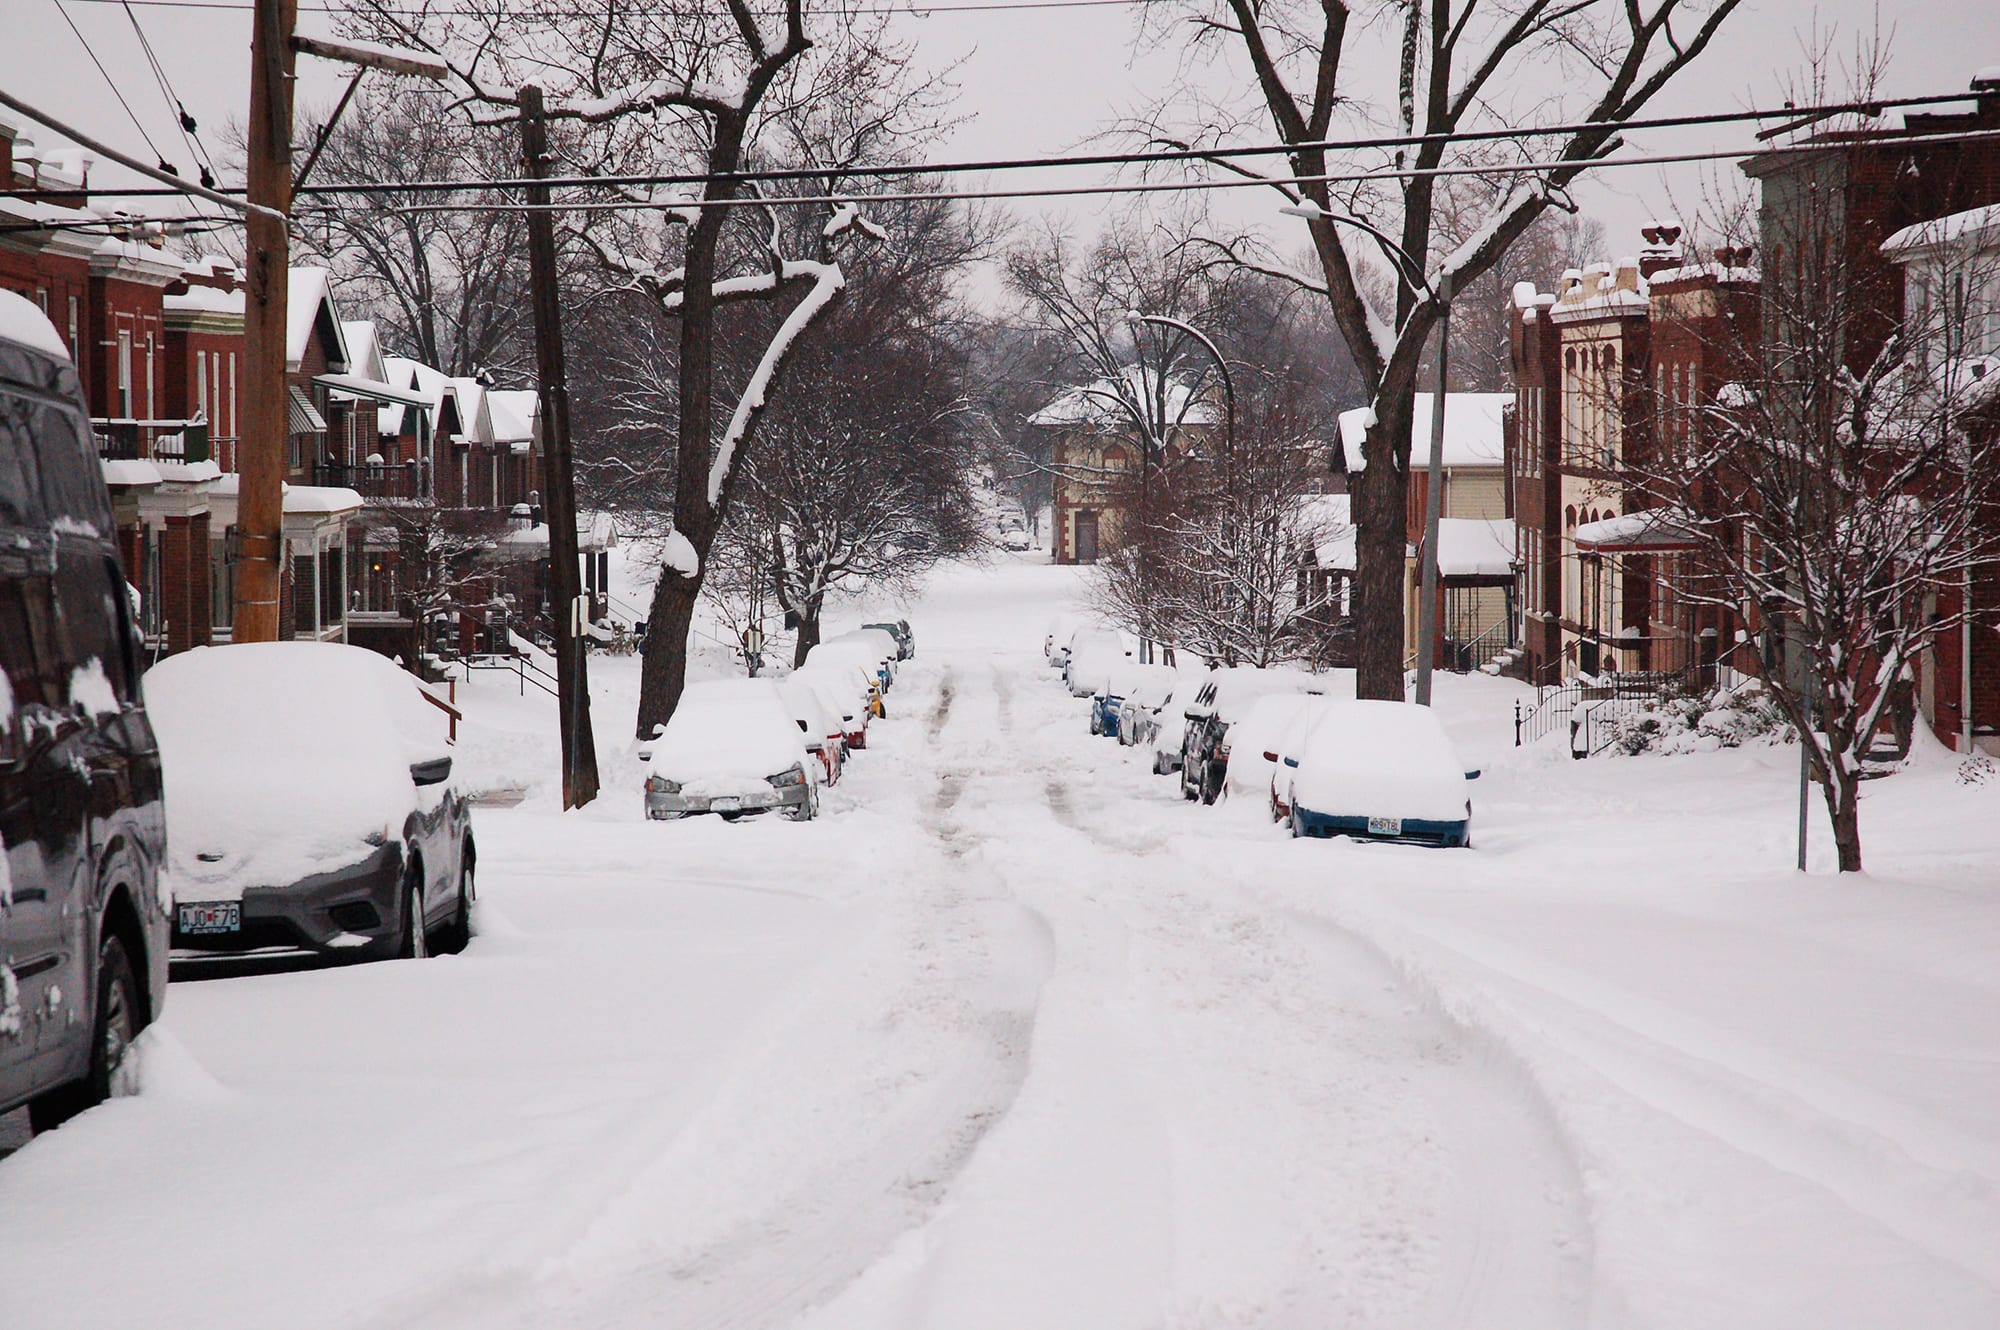 Virginia Avenue in the snow.